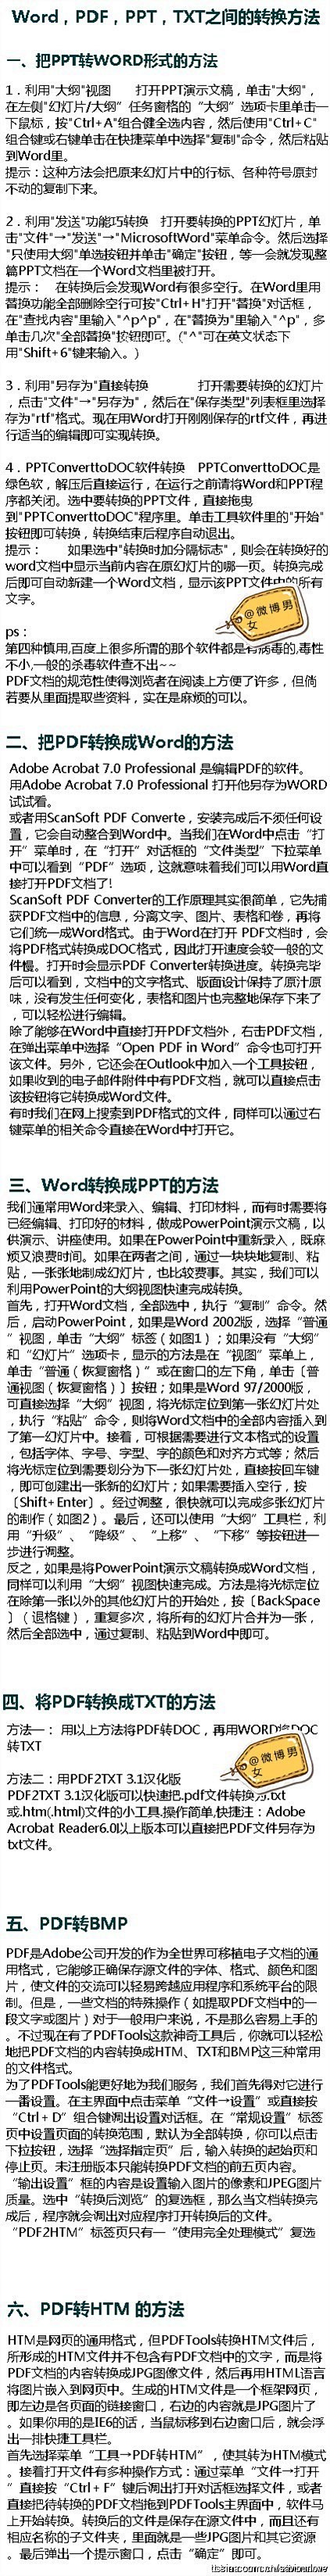 ppt word pdf
